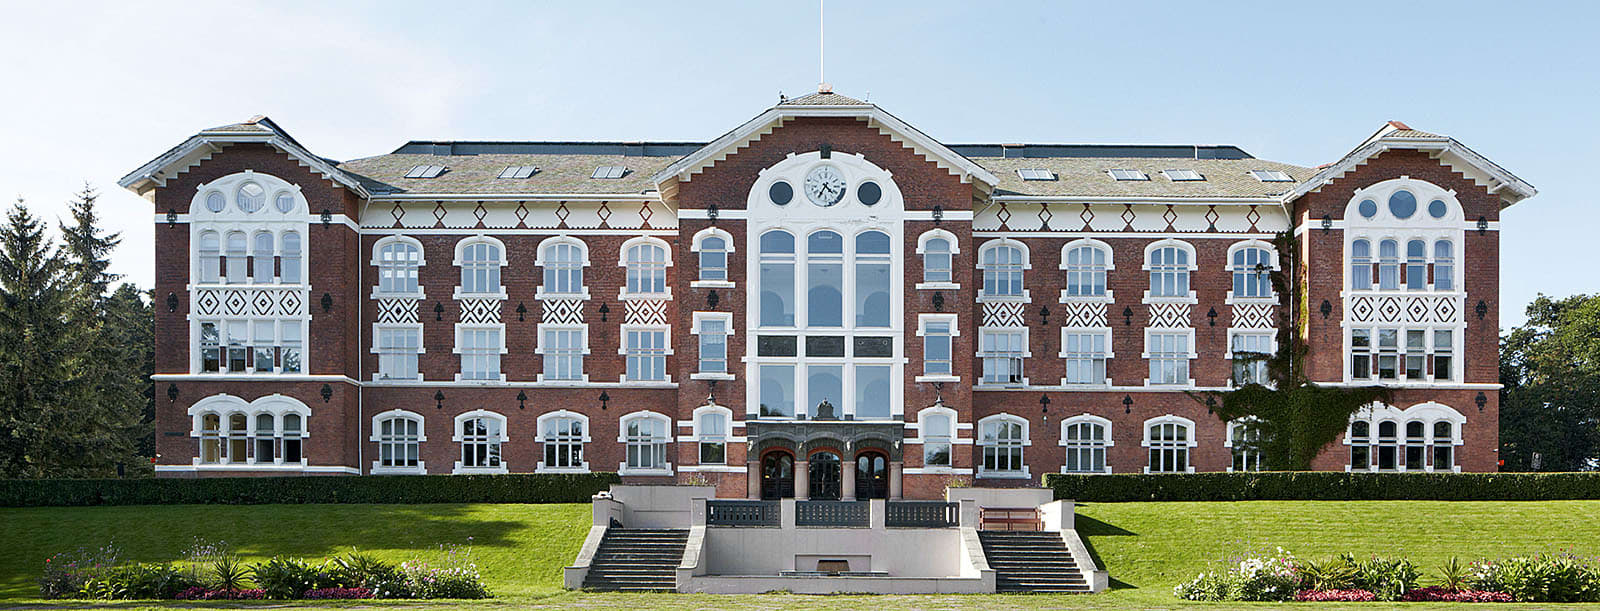 Norwegian University of Life Sciences NMBU in Norway